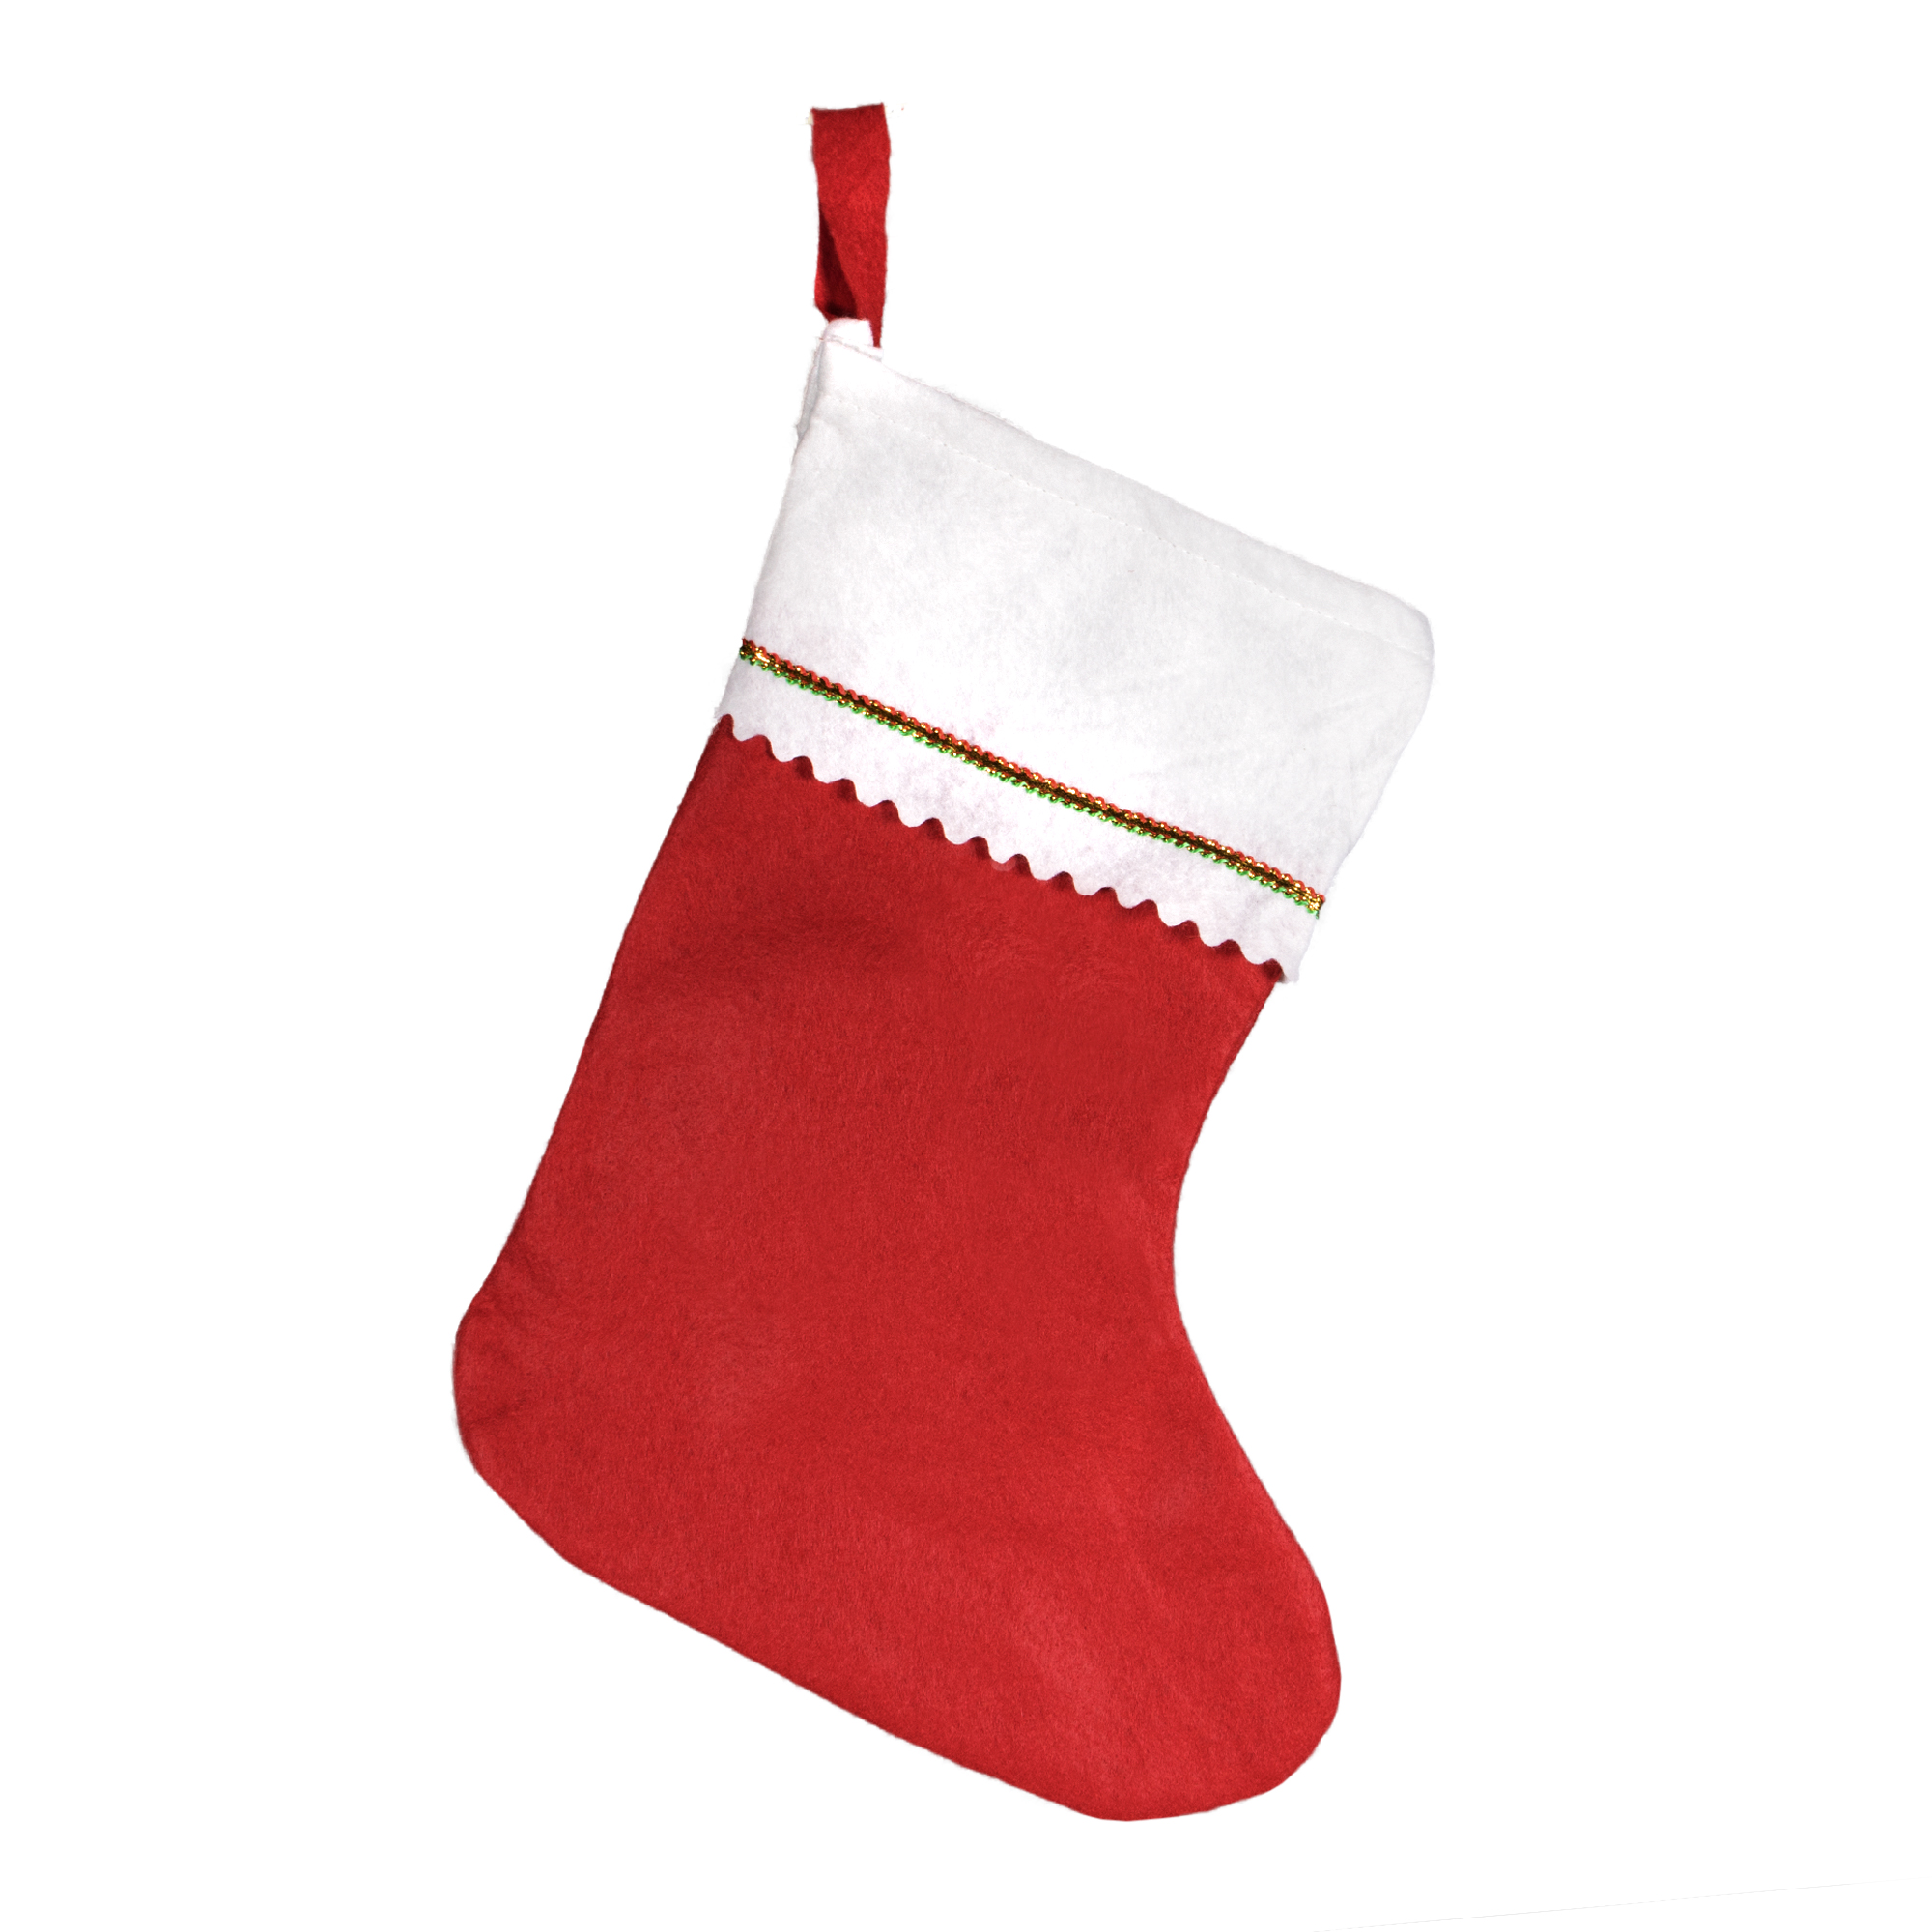 Red Felt 15" Christmas Stockings by Windy City Novelties